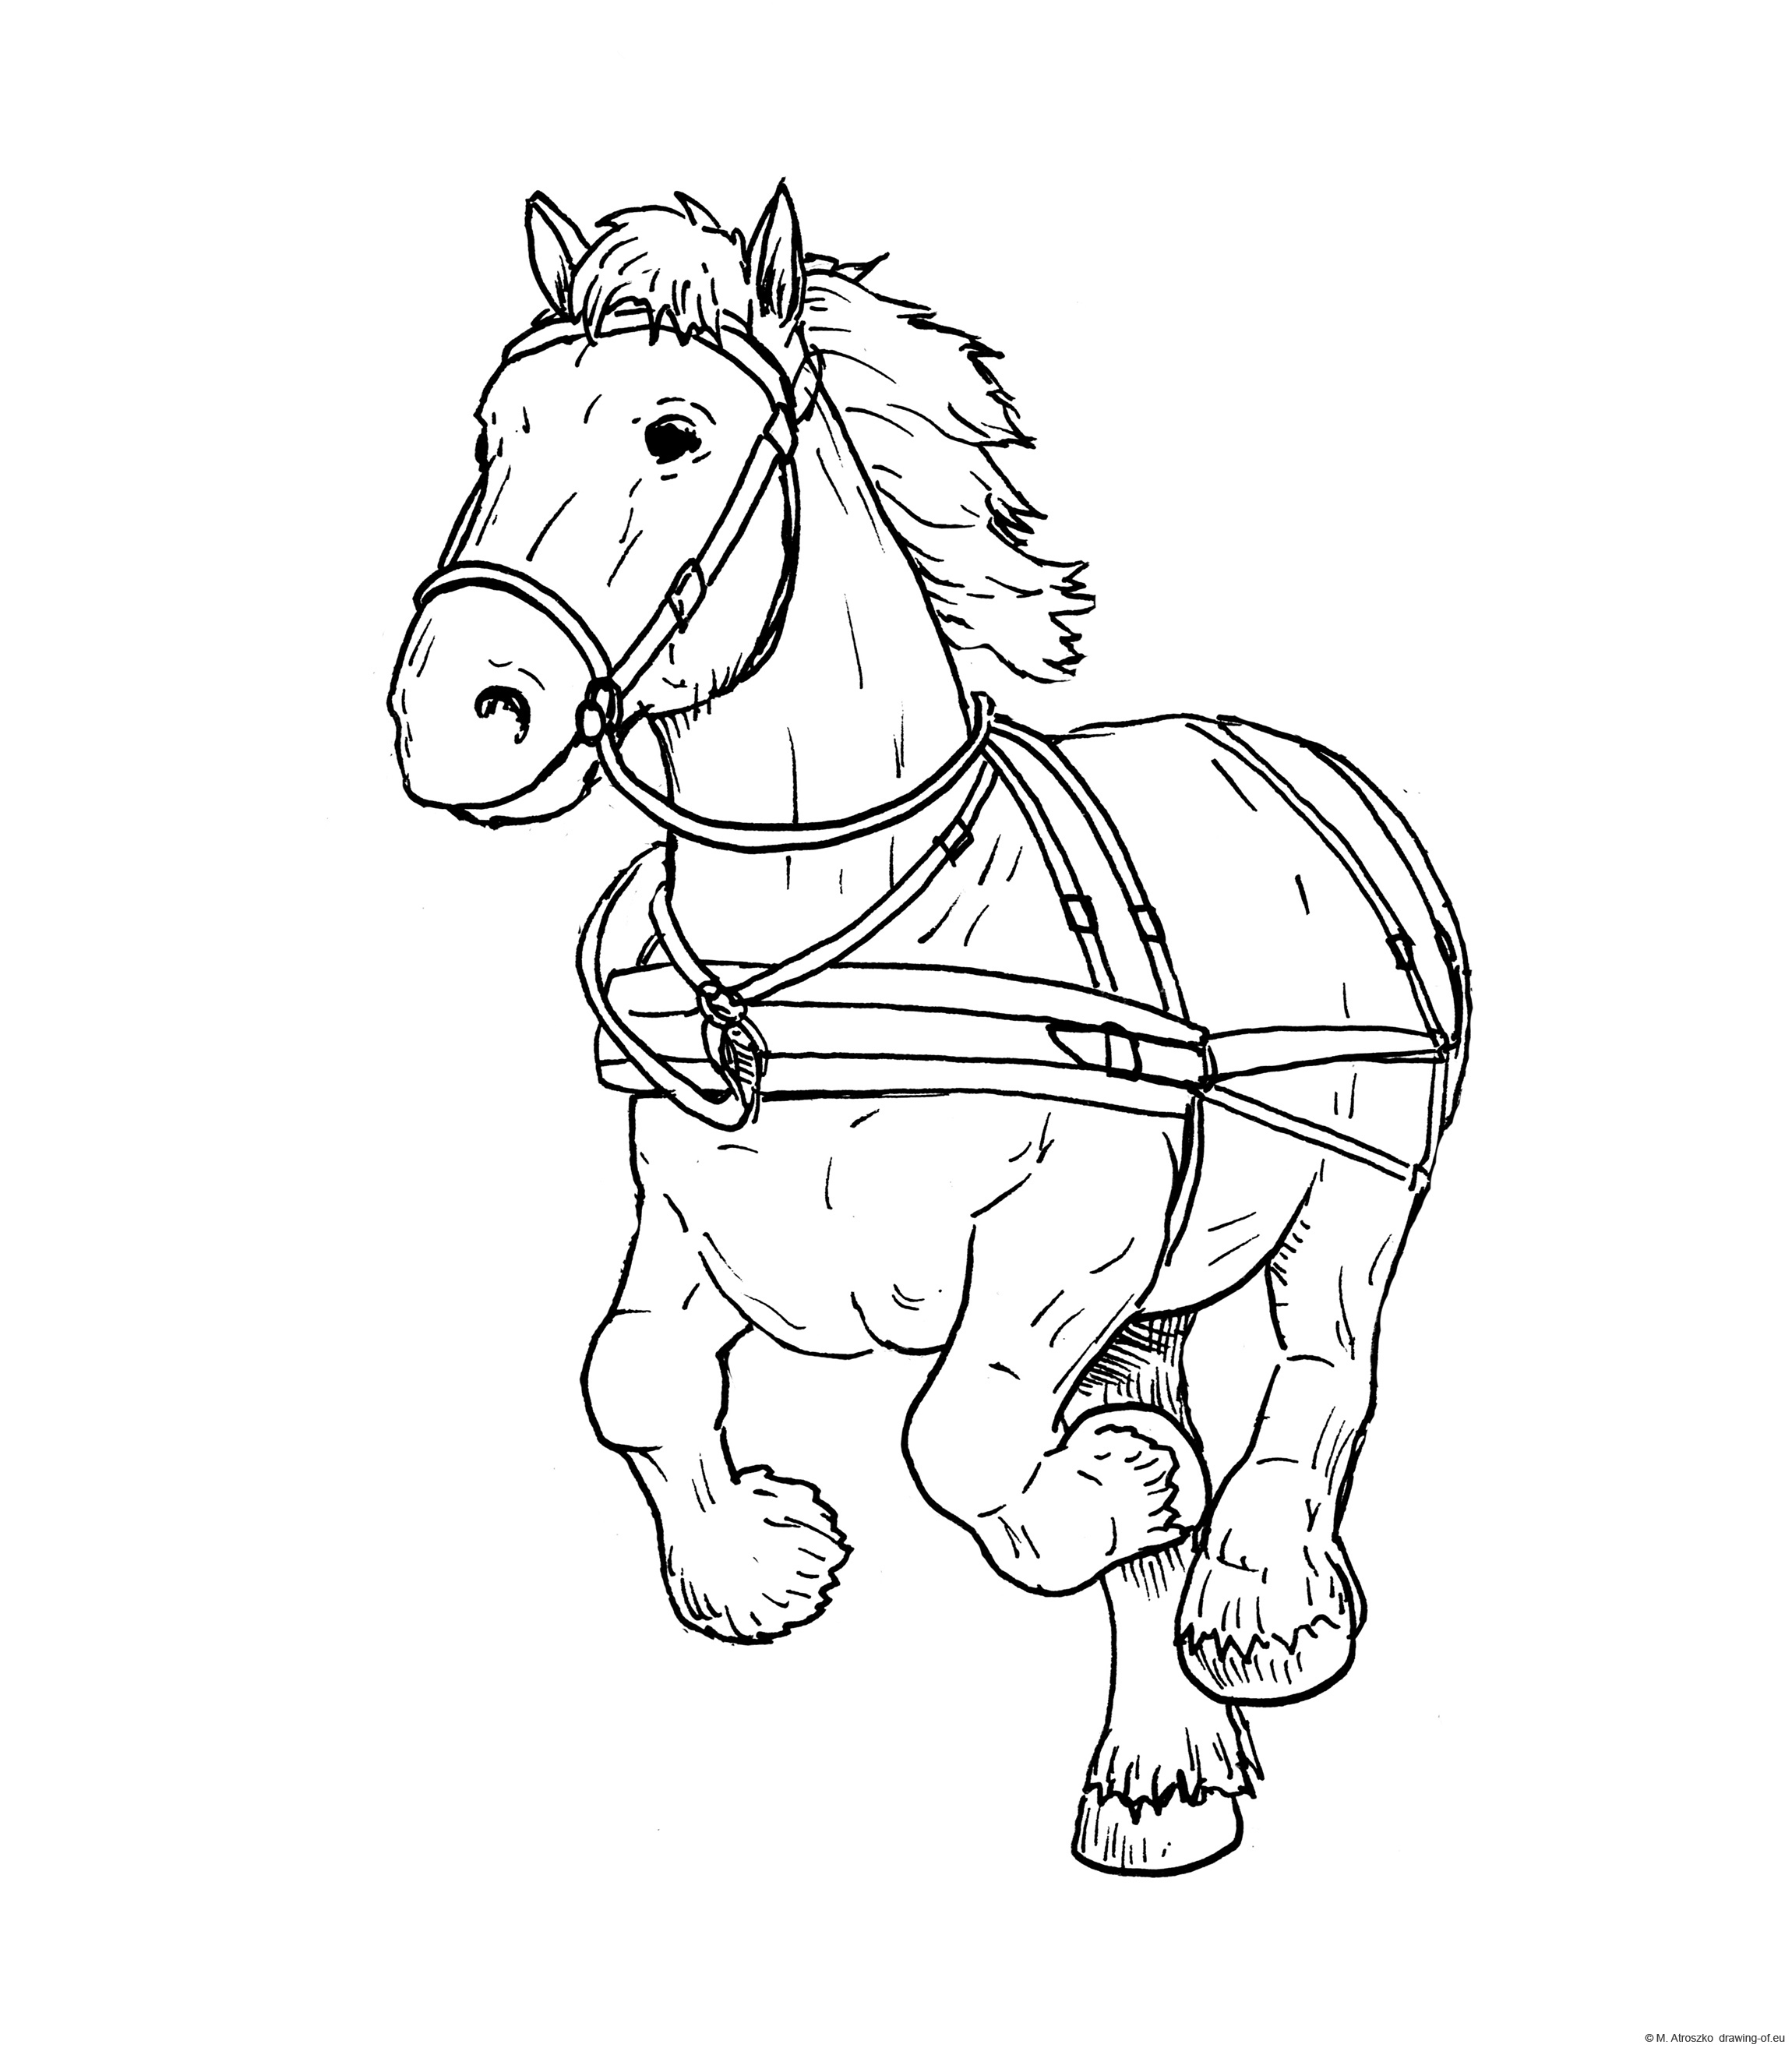 Drawing of draft horse